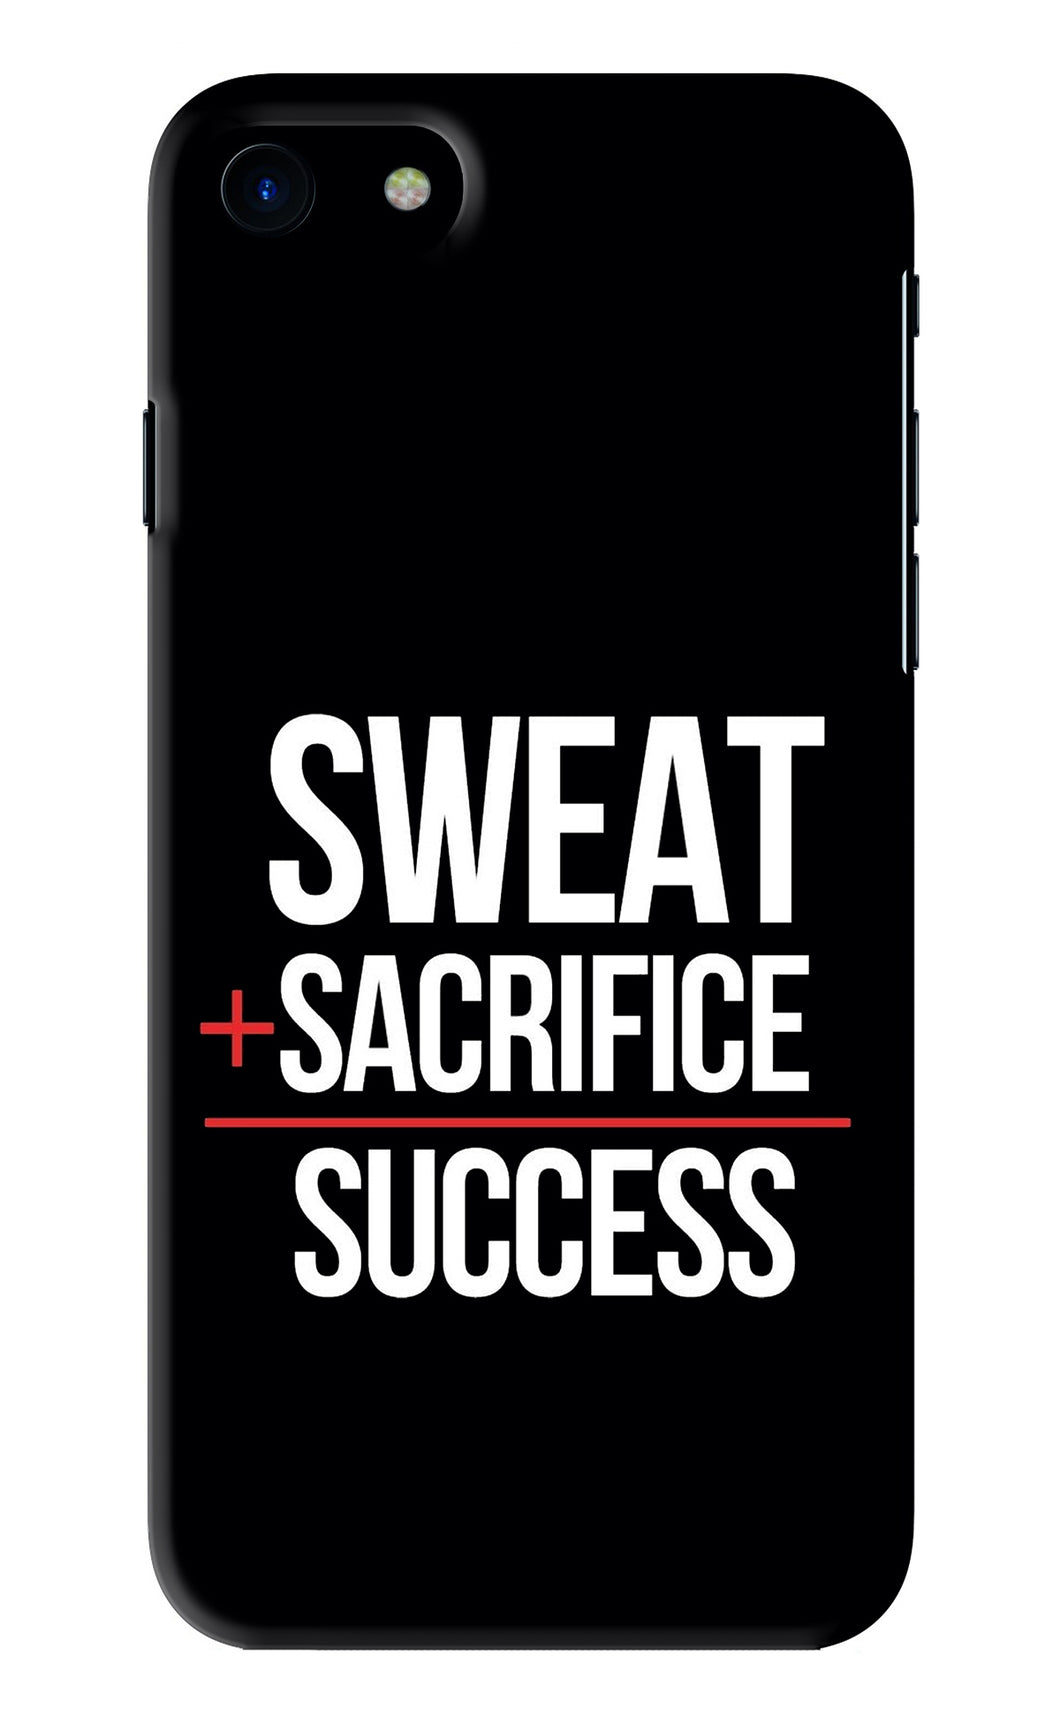 Sweat Sacrifice Success iPhone SE 2020 Back Skin Wrap